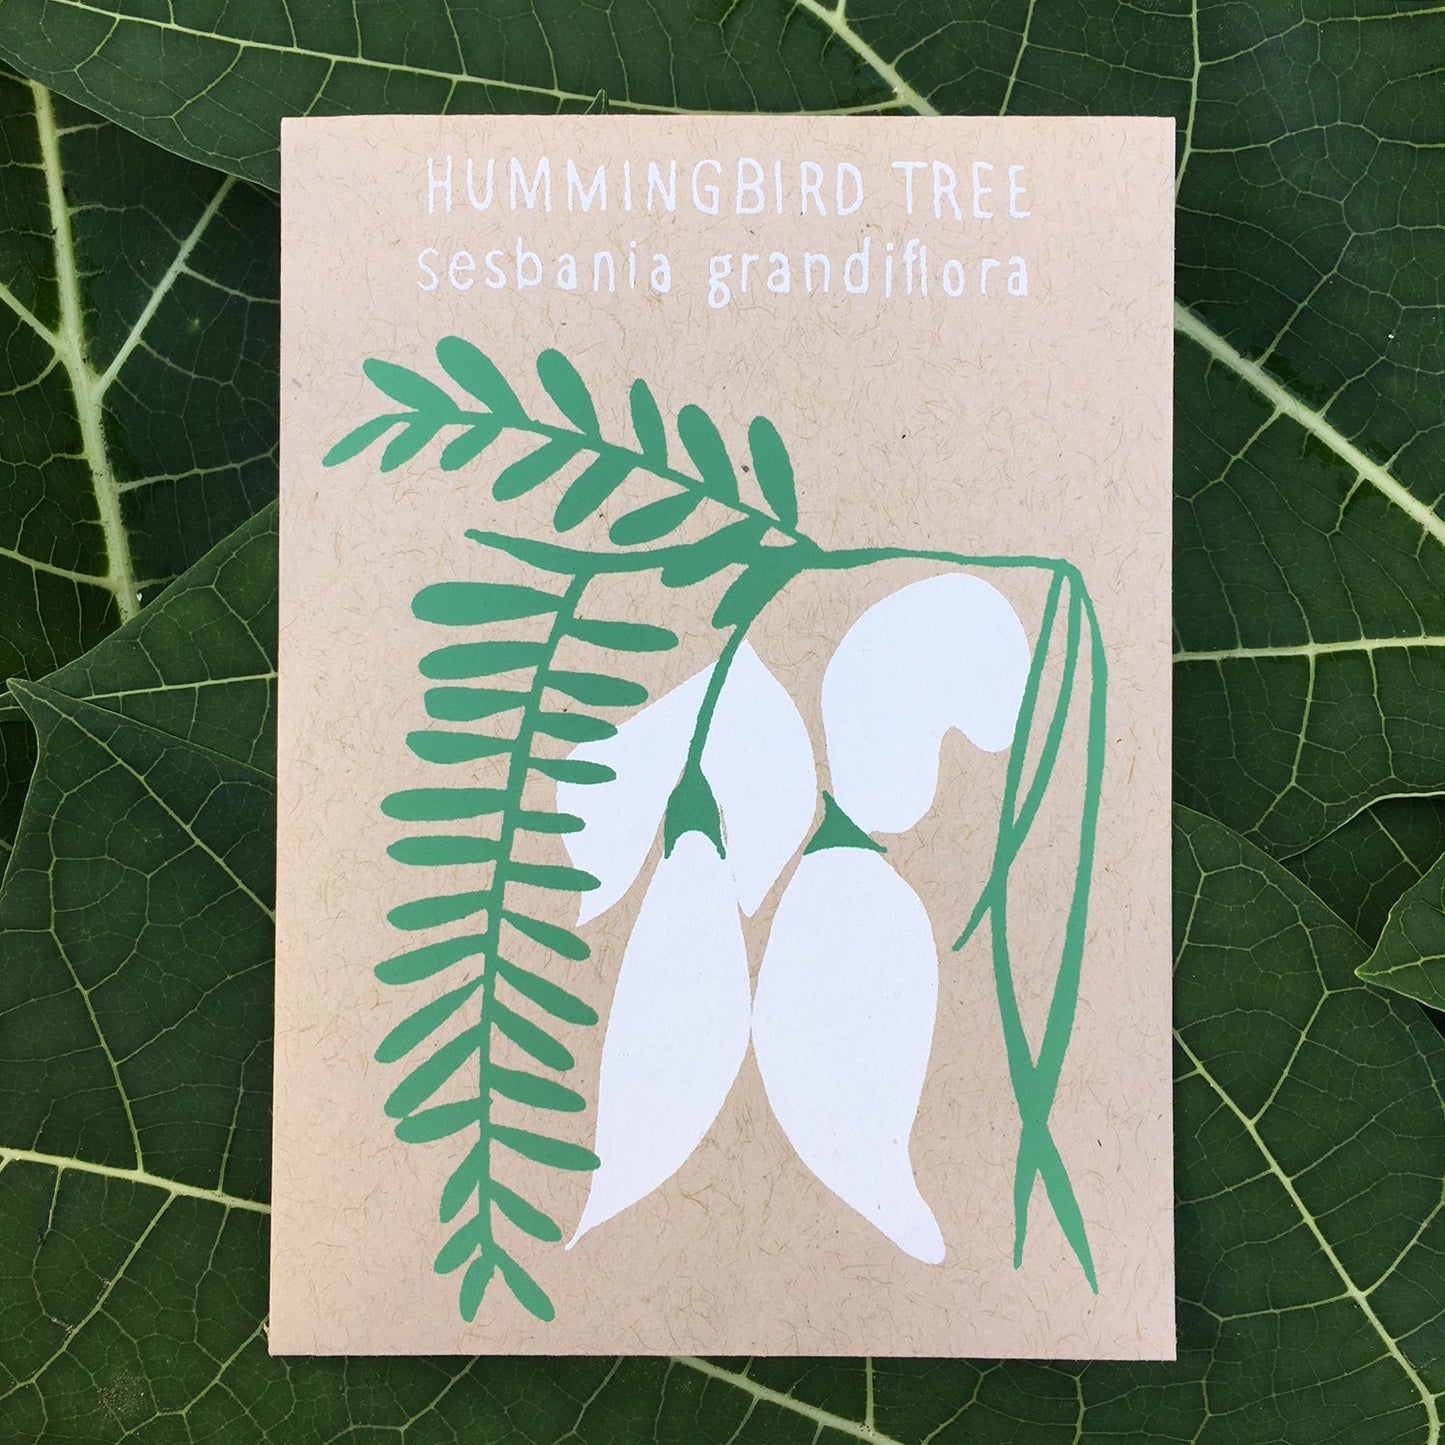 White Hummingbird Tree (sesbania grandiflora) 30 seeds